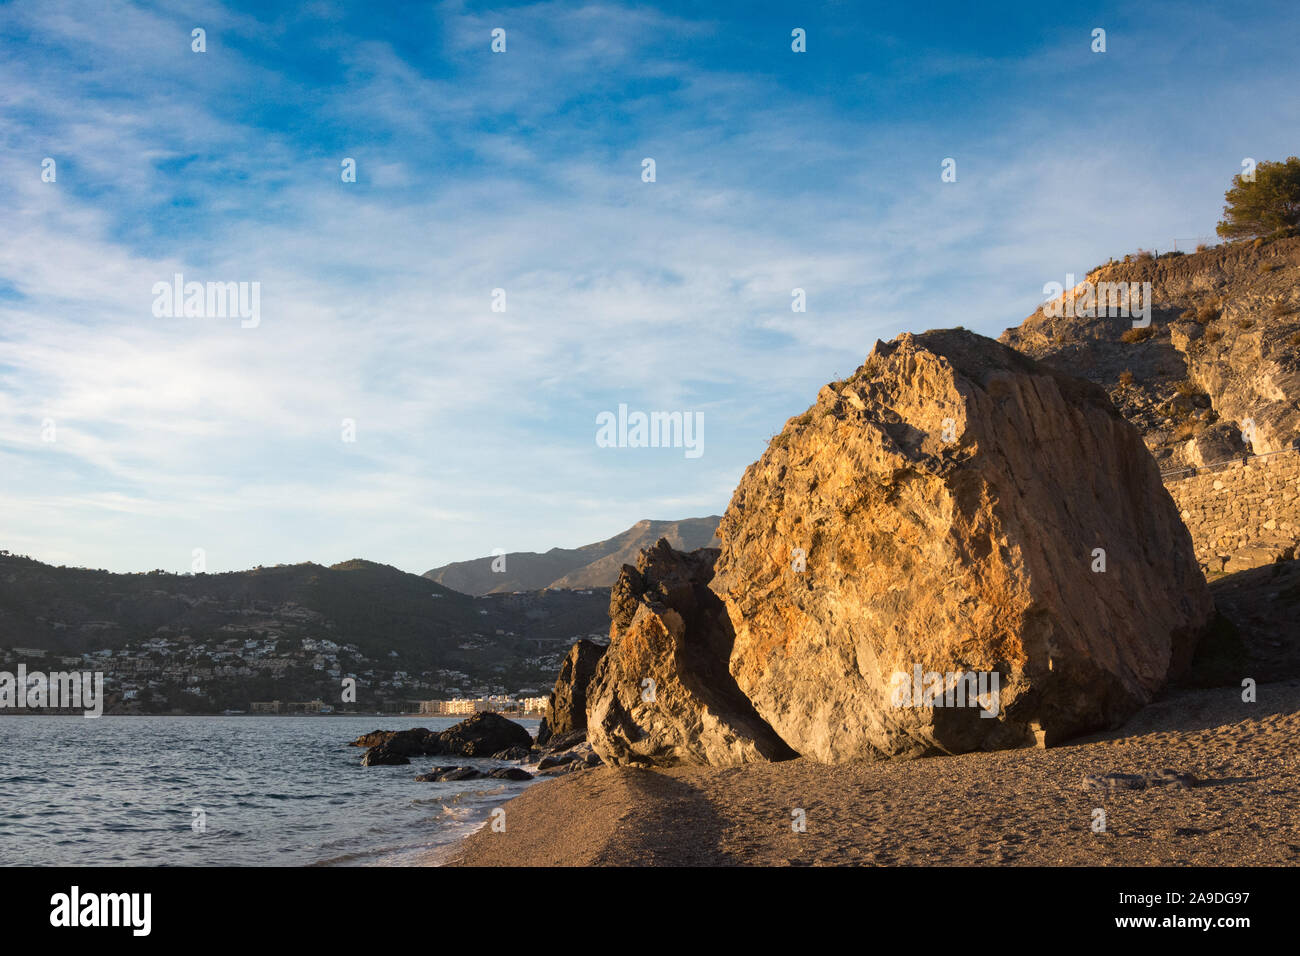 A huge boulder lying on the beach at La Herradura, Andalusia, Spain Stock Photo